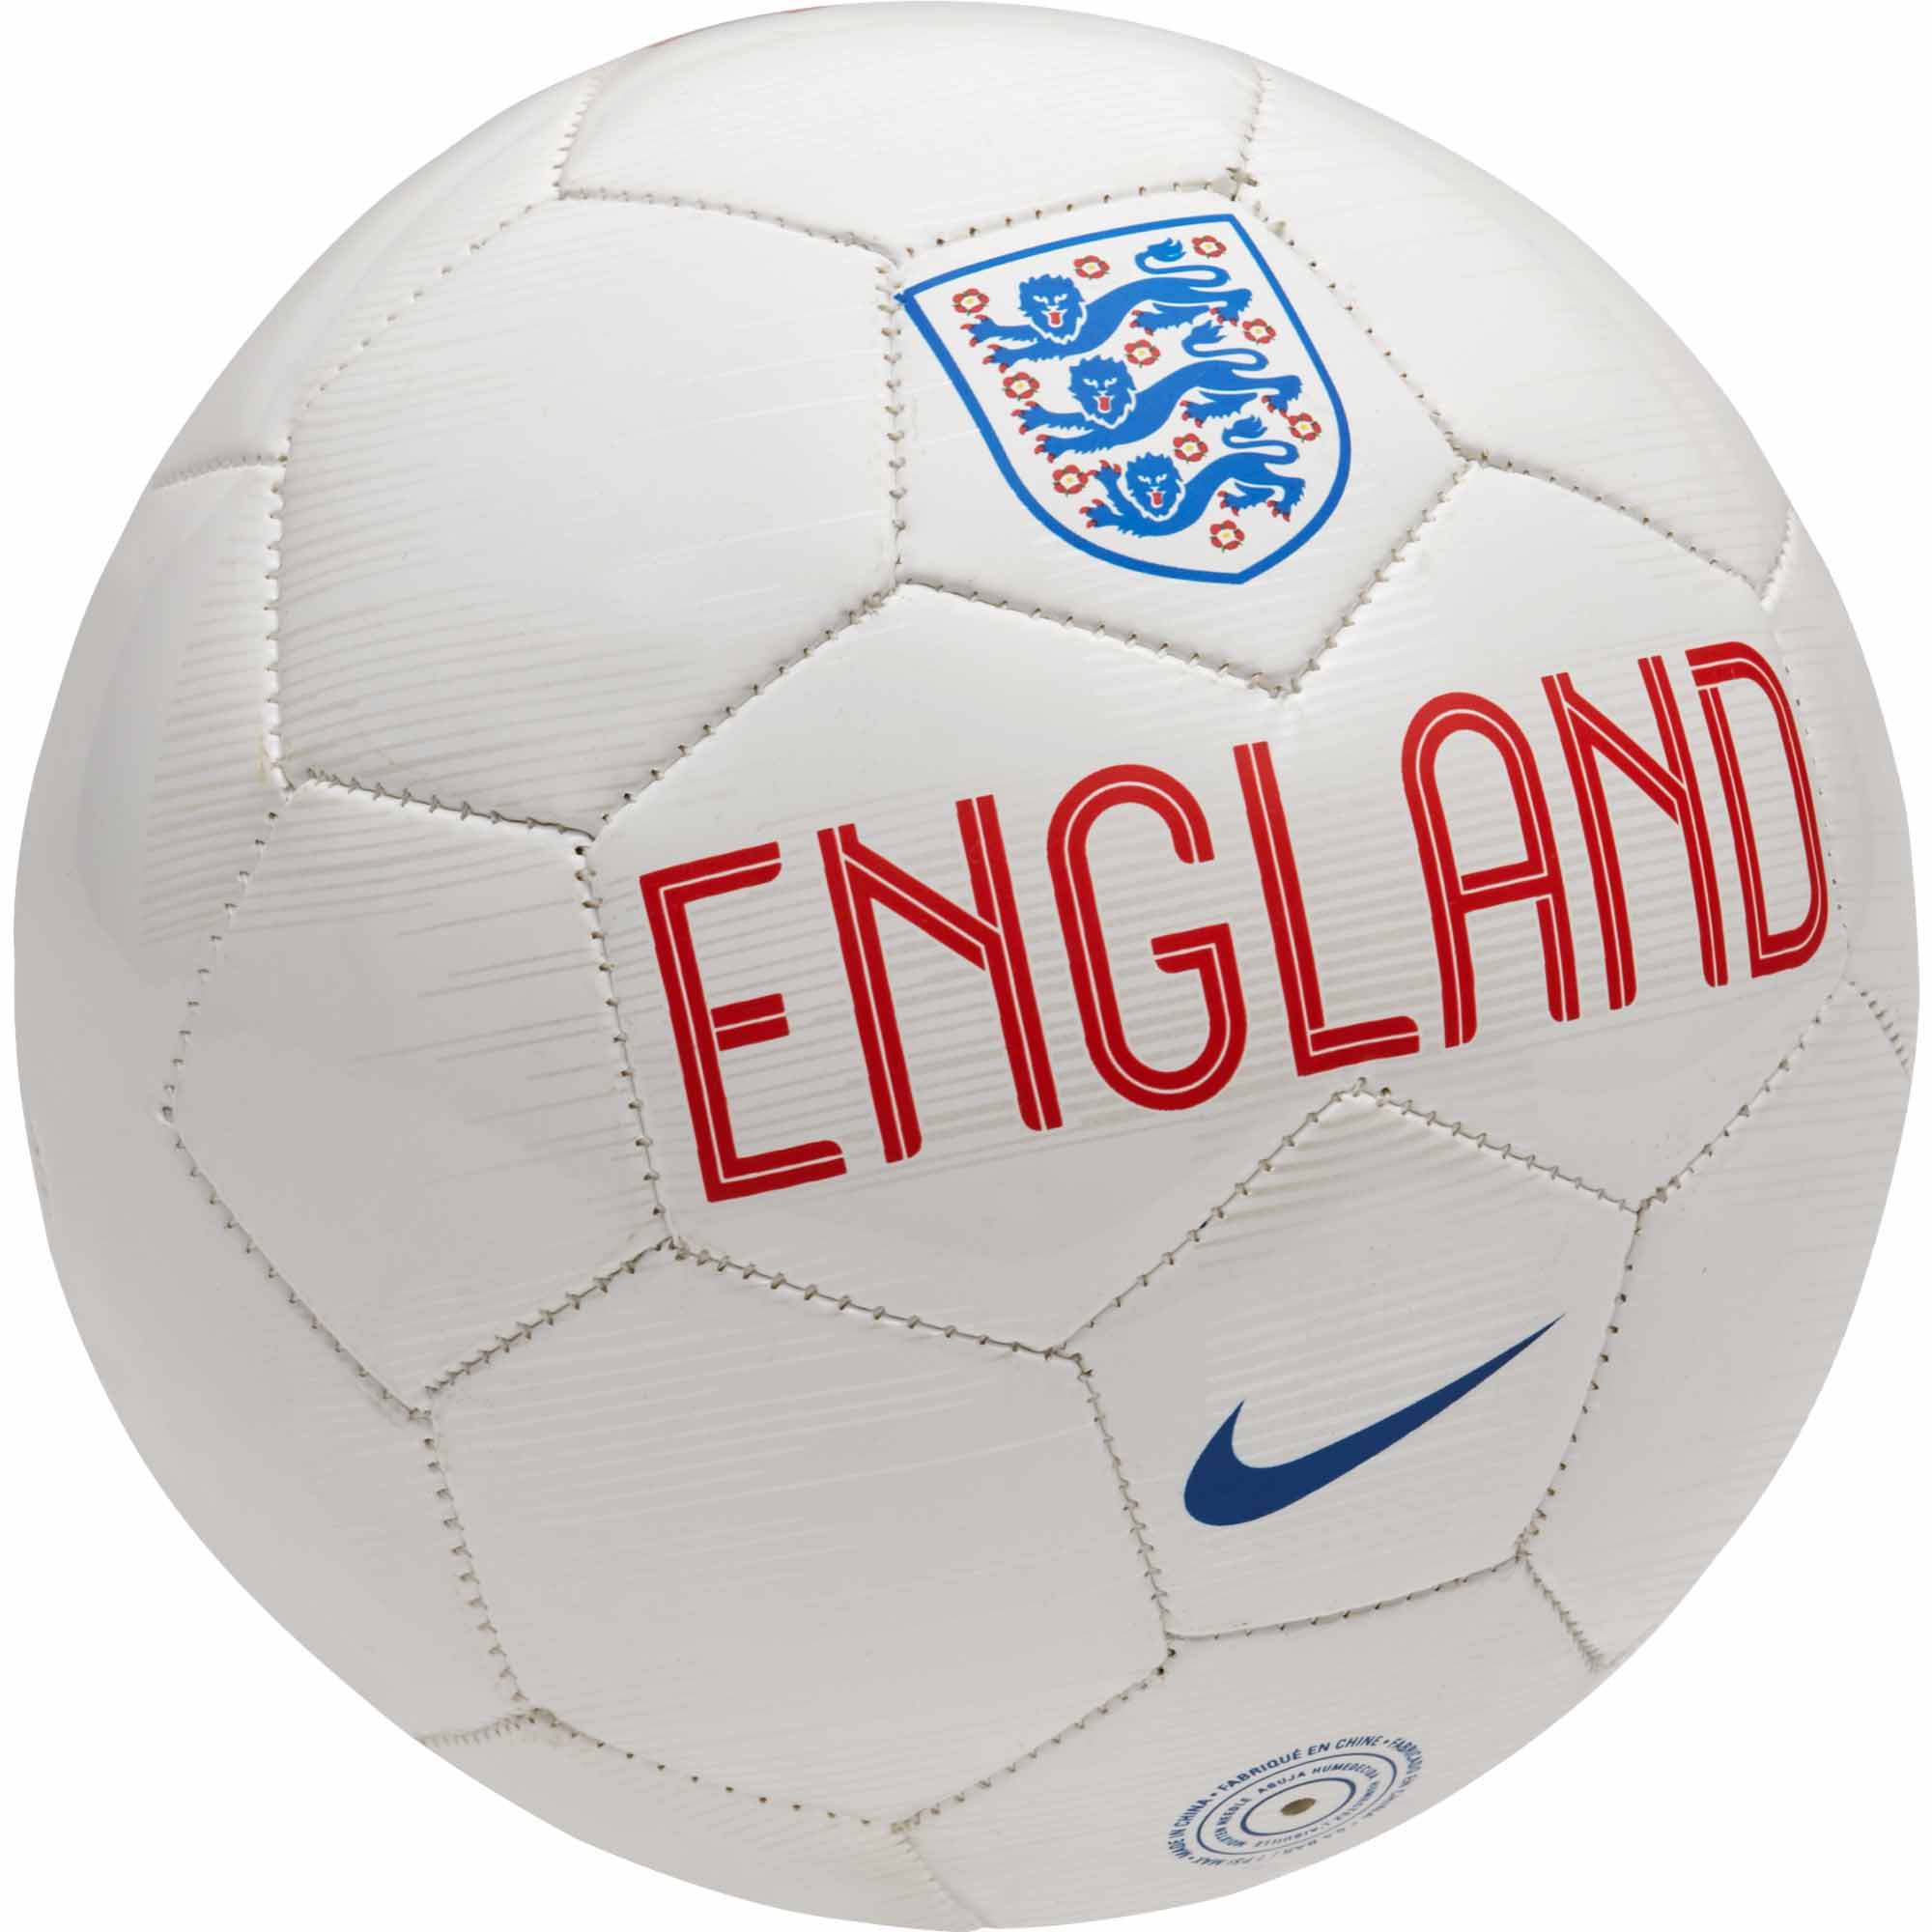 england soccer ball